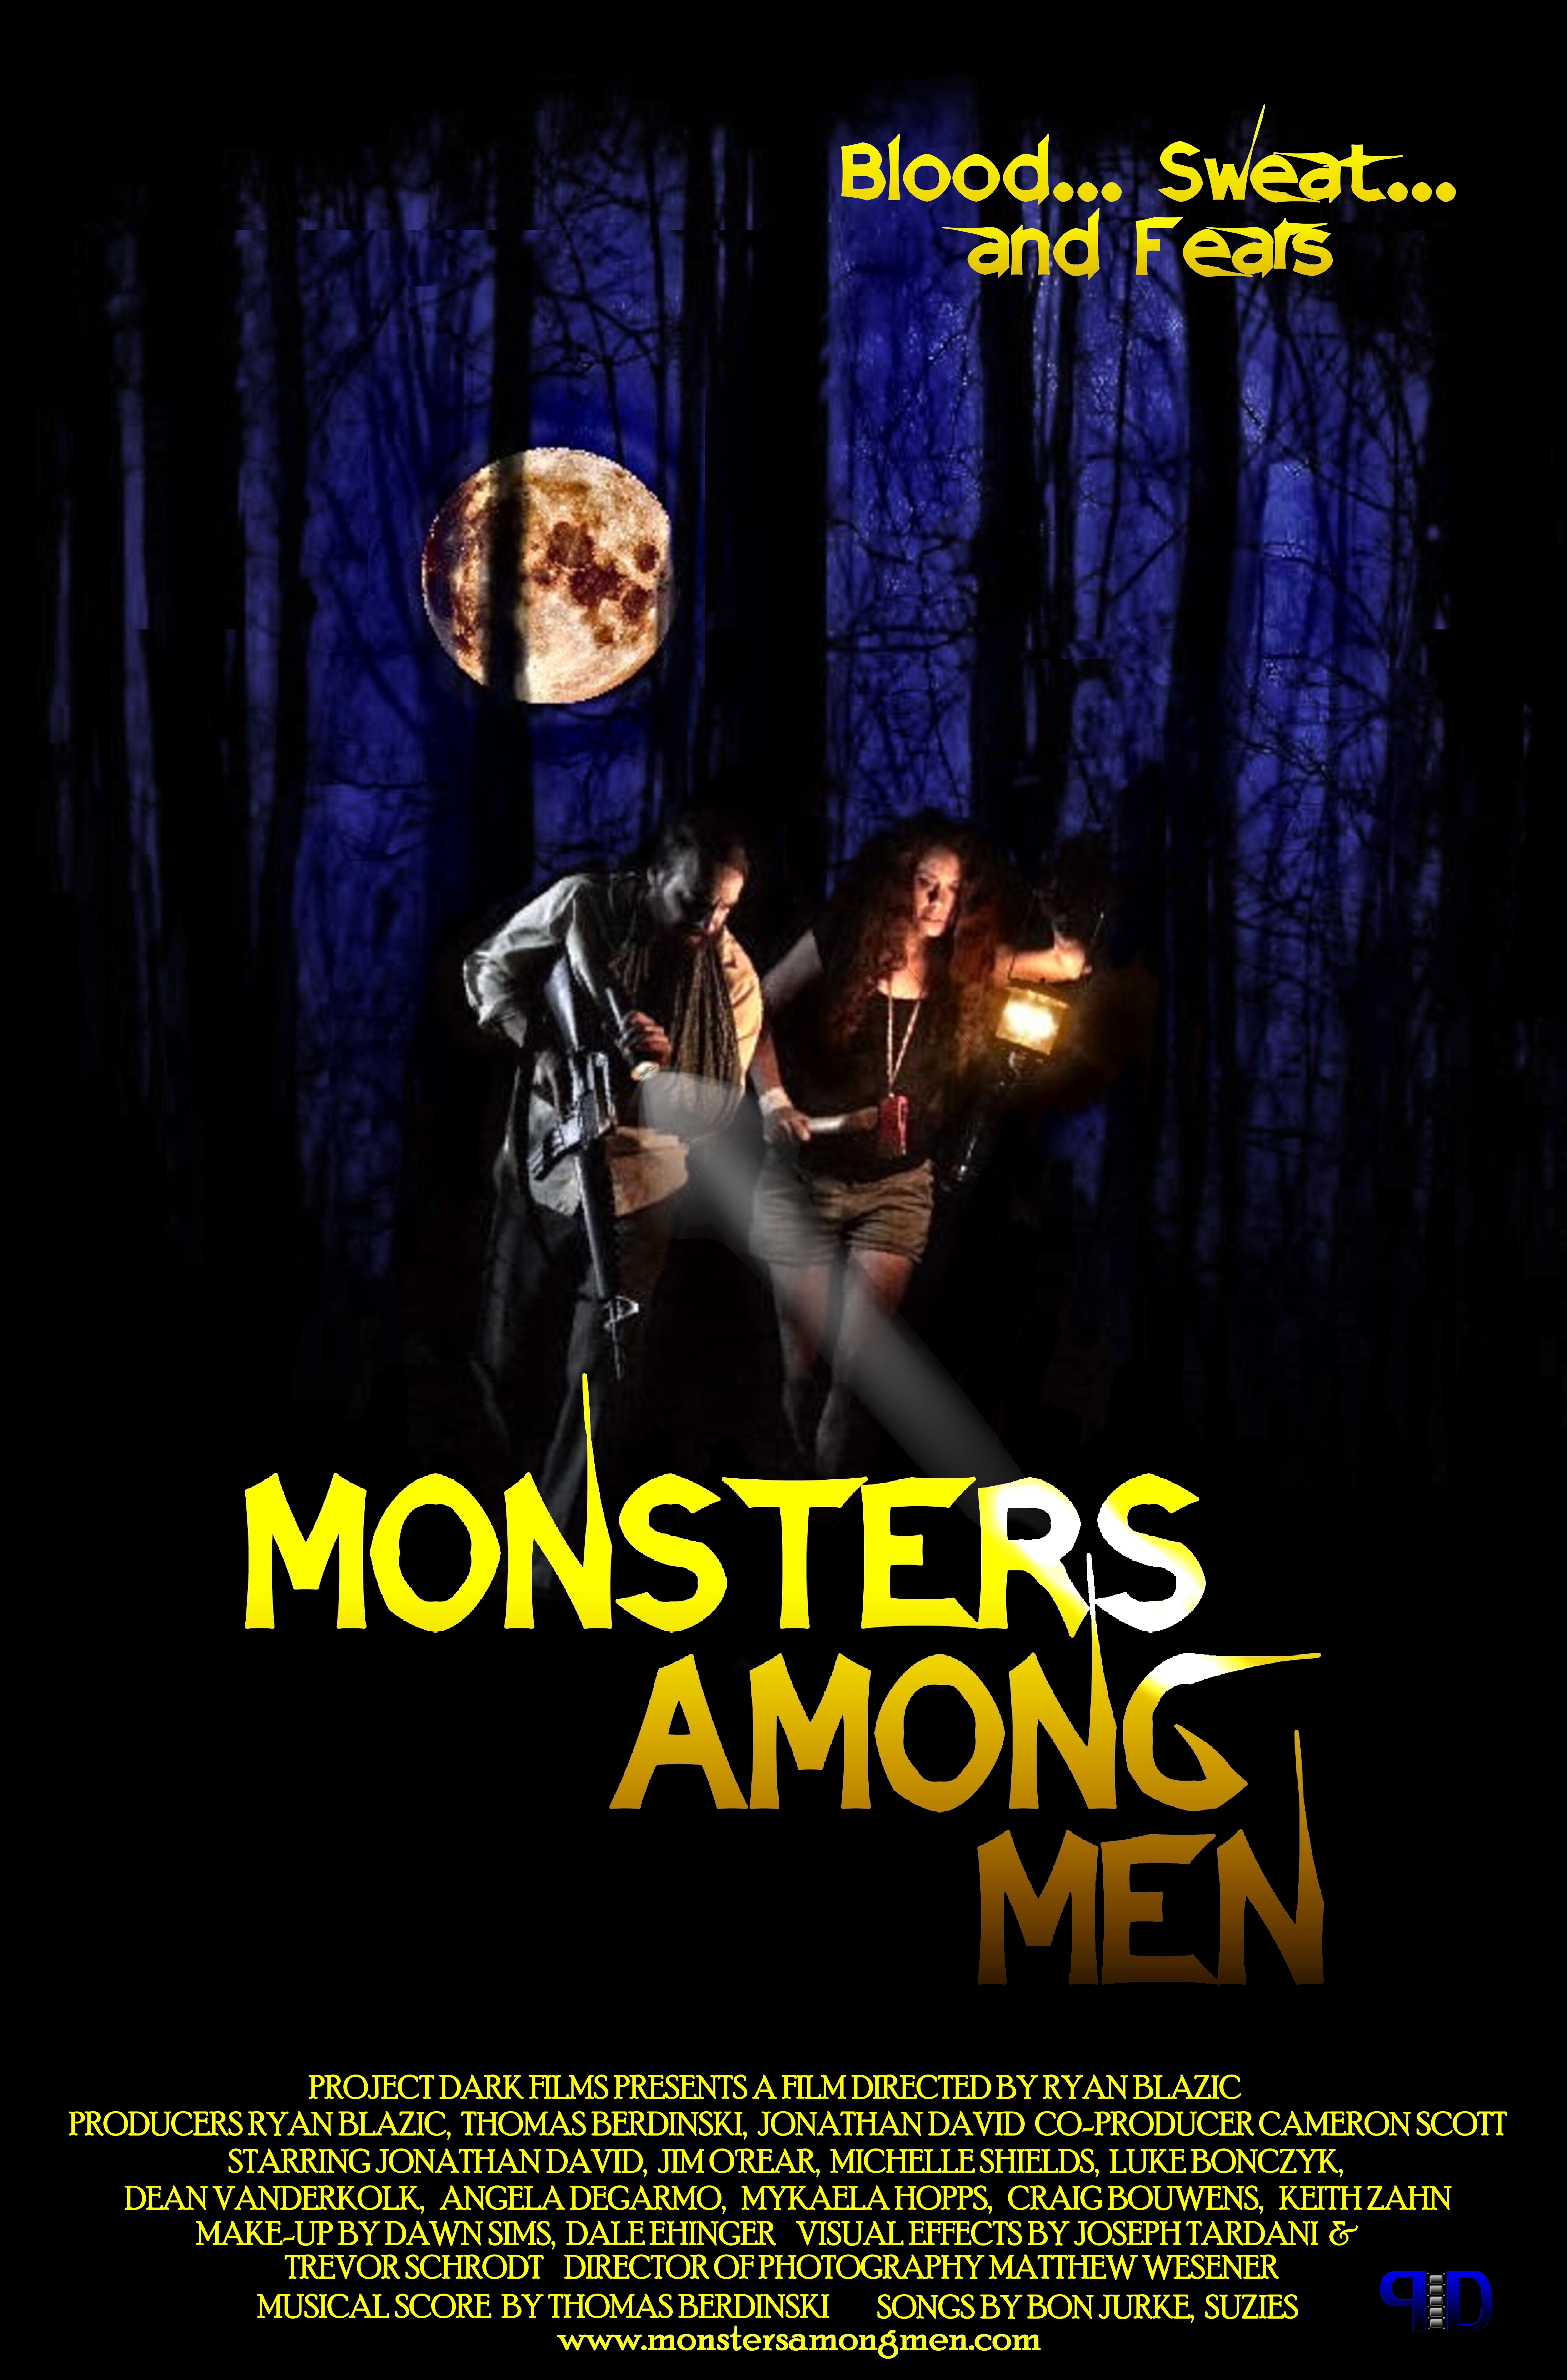 Nonton film Monsters Among Men layarkaca21 indoxx1 ganool online streaming terbaru